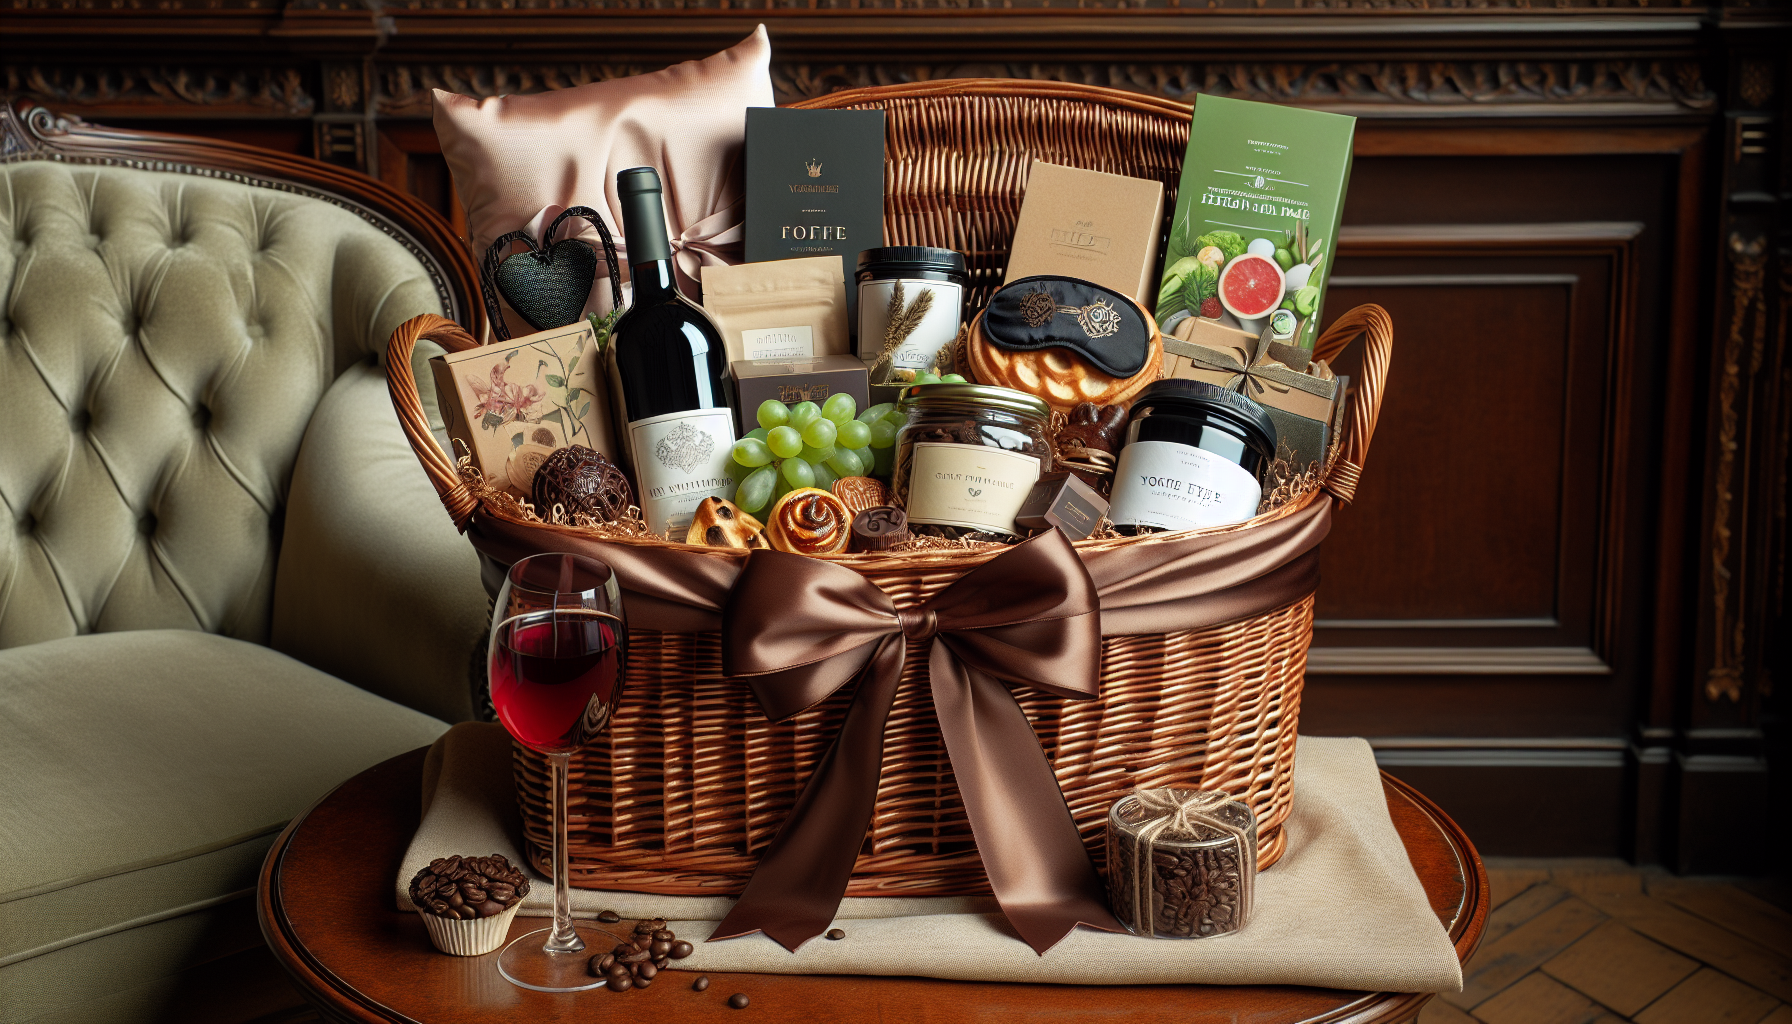 Elegant adult birthday basket with gourmet foods and wine